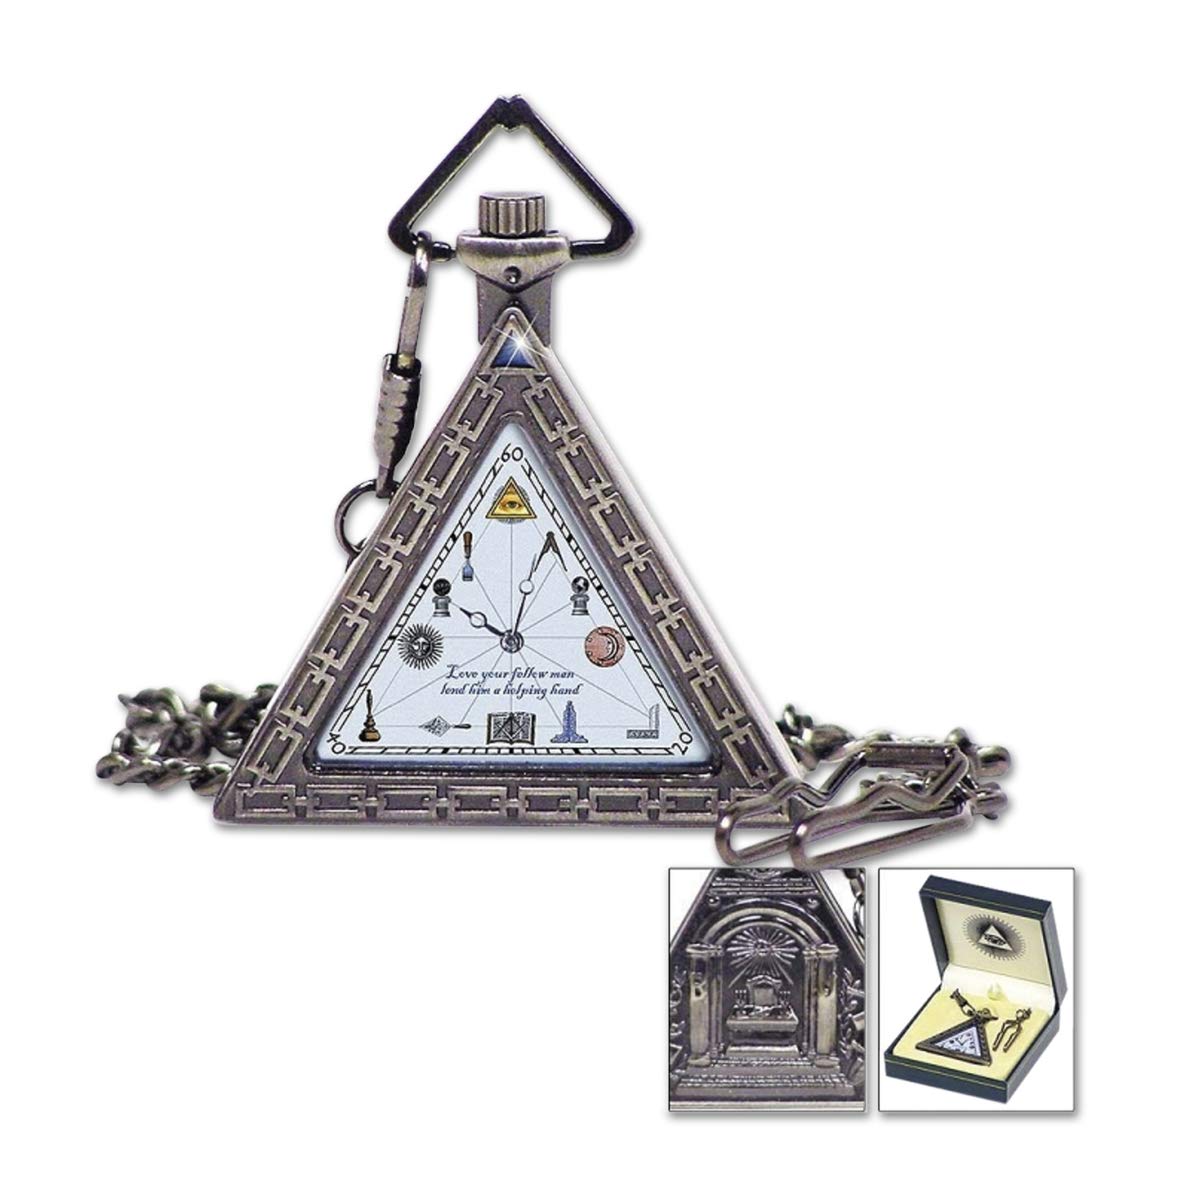 Triangular Working Tools Antique Silver Masonic Pocket Watch - 2